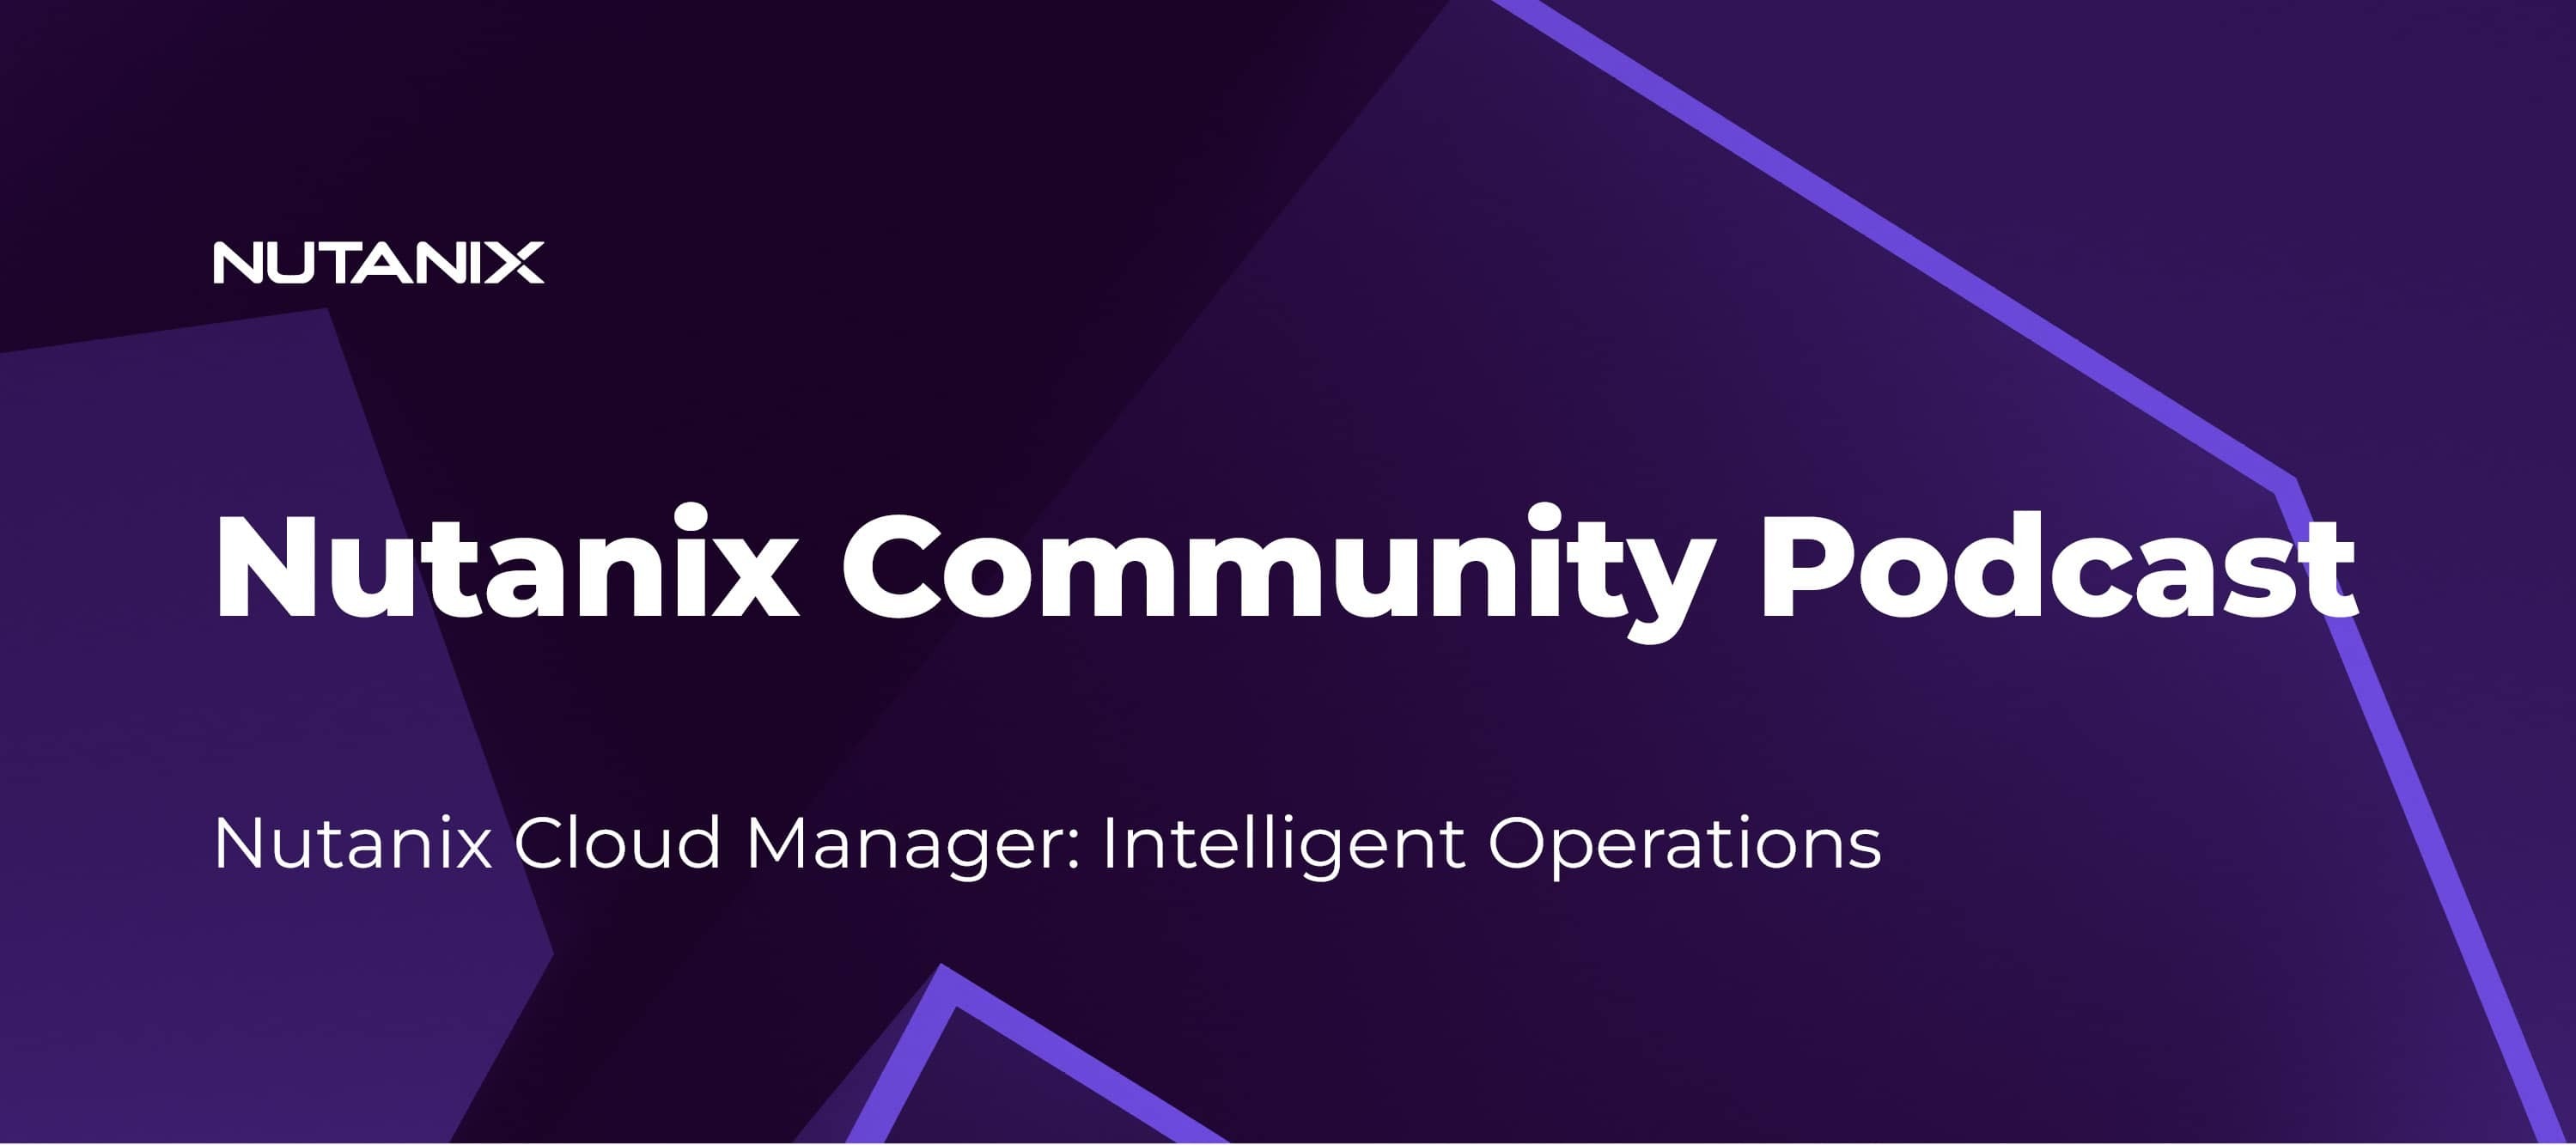 Nutanix Community Podcast: Nutanix Cloud Manager Intelligent Operations